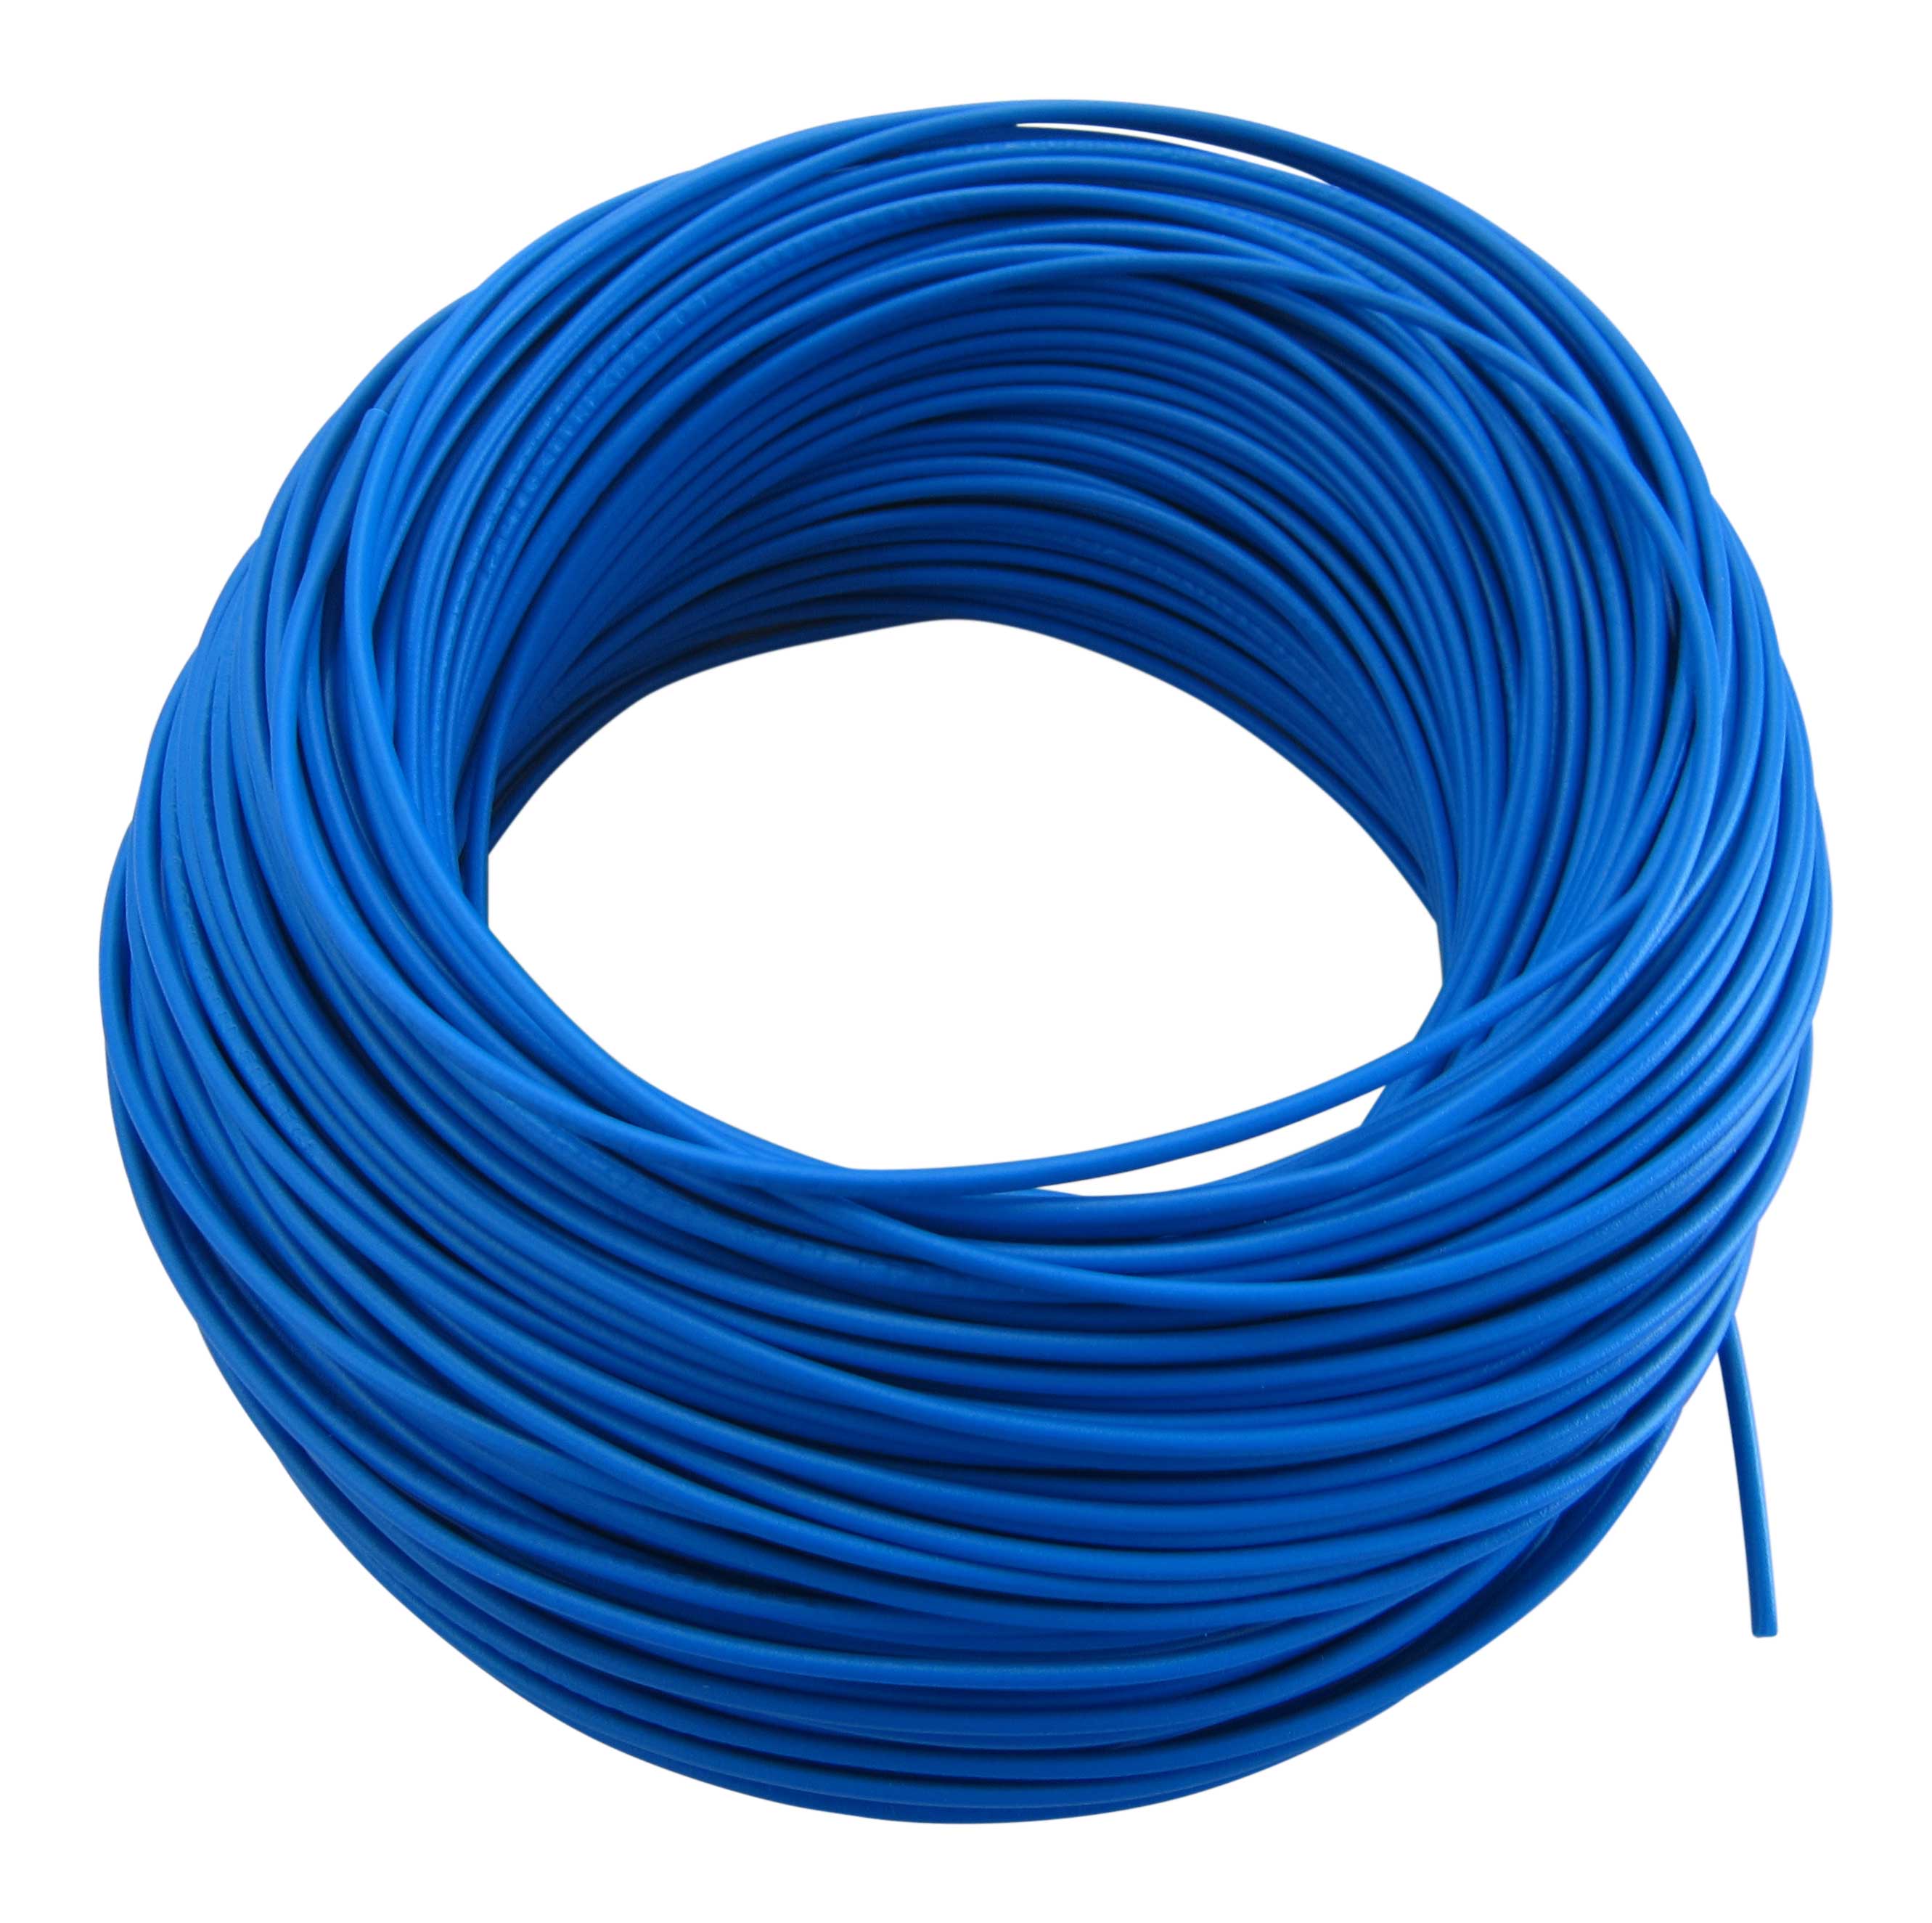 0,31€/m KFZ LKW Kabel Litze Leitung Flexible FLRy 0,75mm² 20m Blau M. in Germany